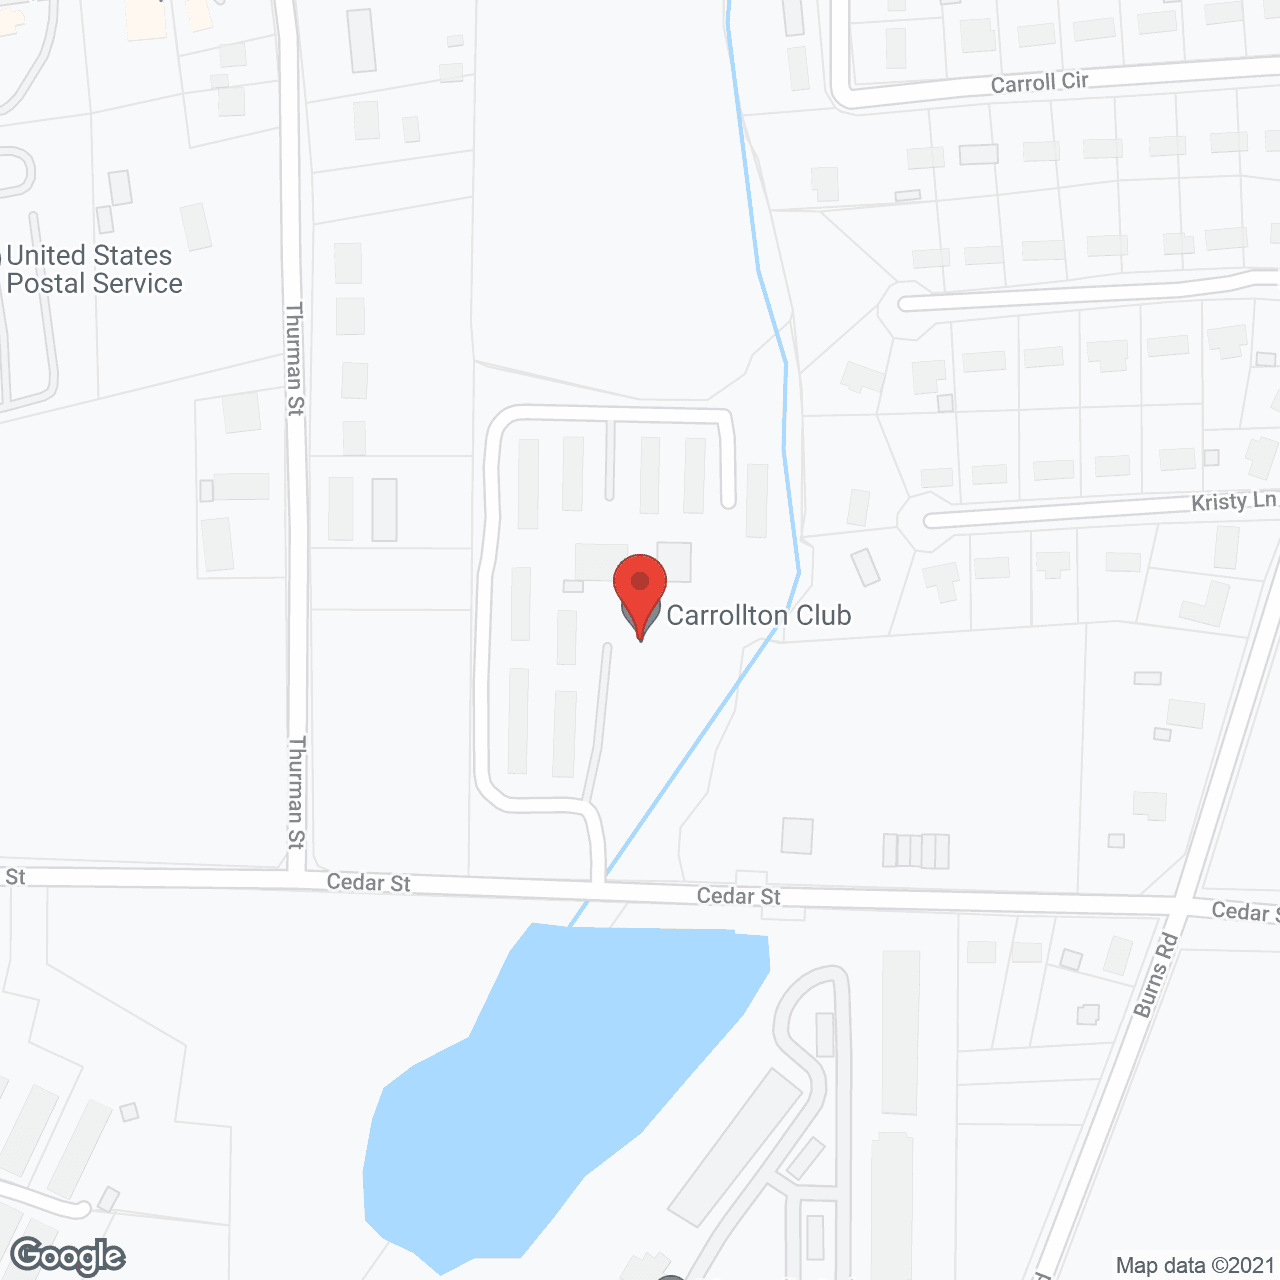 Carrollton Club in google map